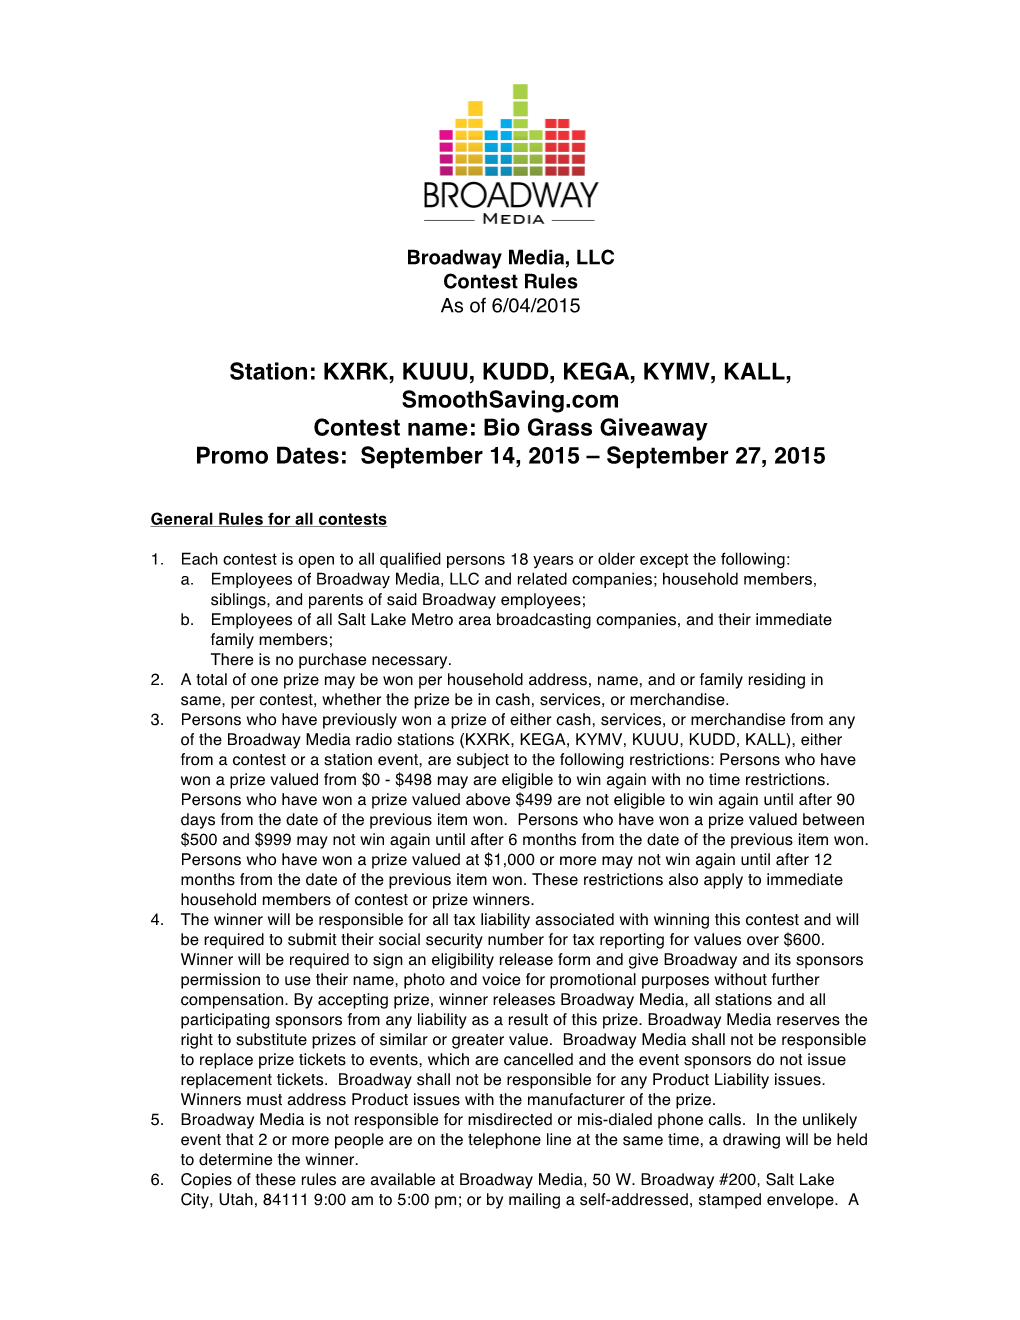 Station: KXRK, KUUU, KUDD, KEGA, KYMV, KALL, Smoothsaving.Com Contest Name: Bio Grass Giveaway Promo Dates: September 14, 2015 – September 27, 2015